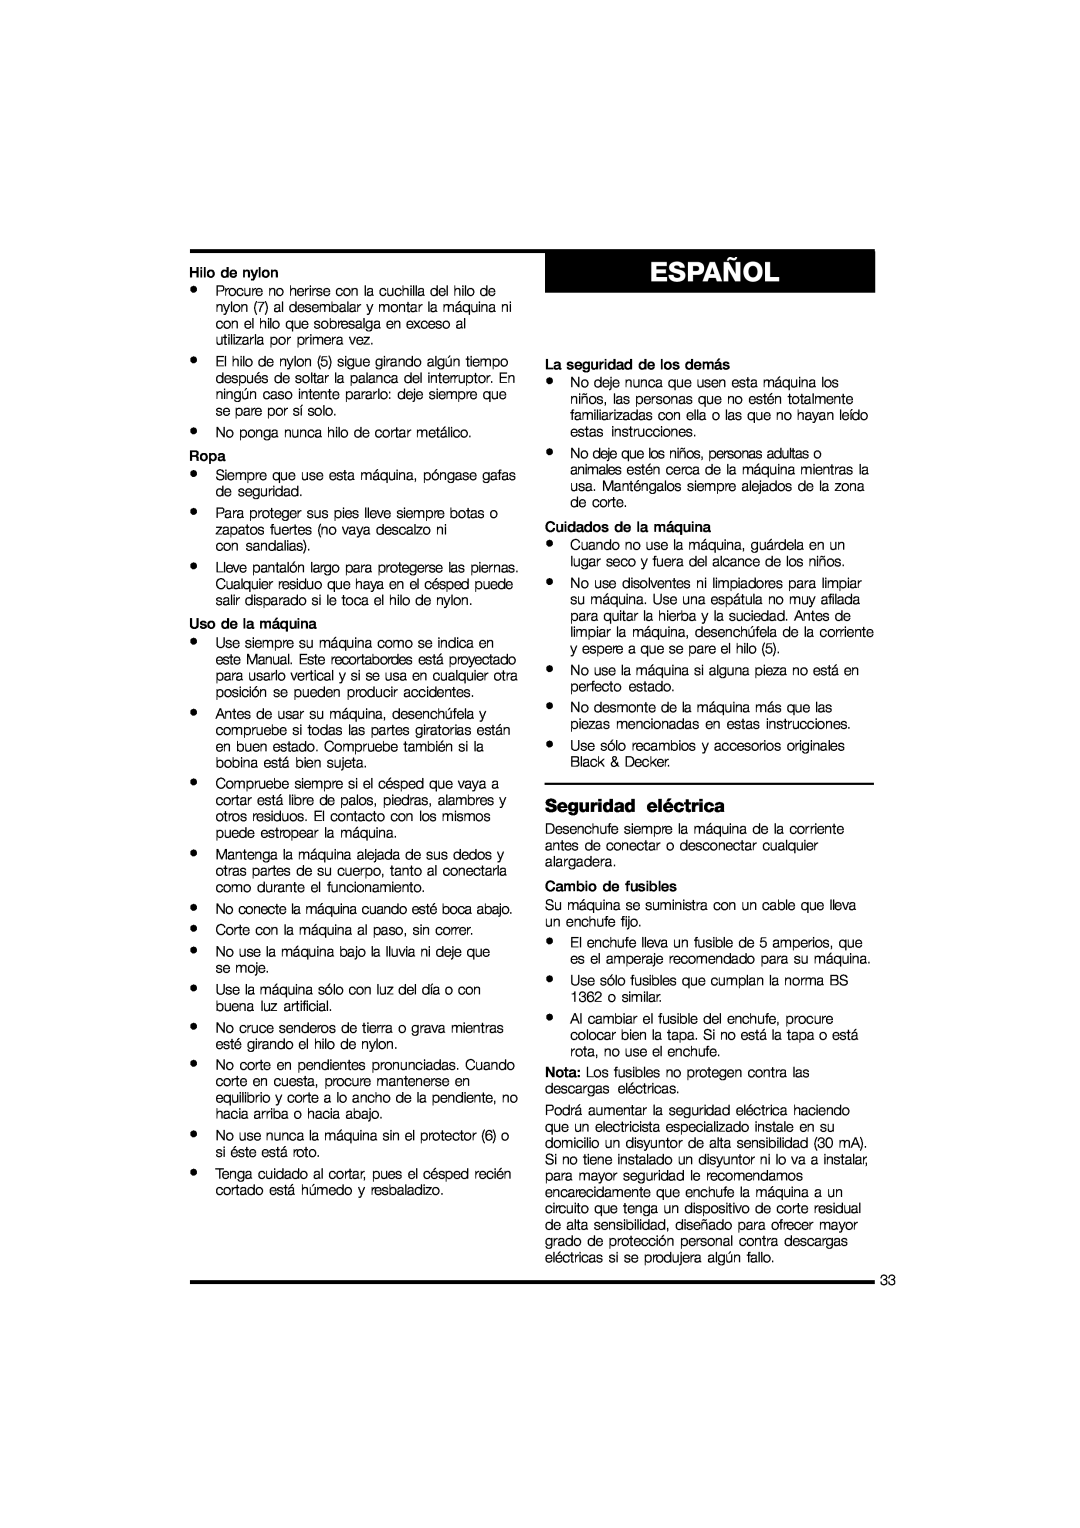 Black & Decker GL570 instruction manual Español, Seguridad eléctrica 